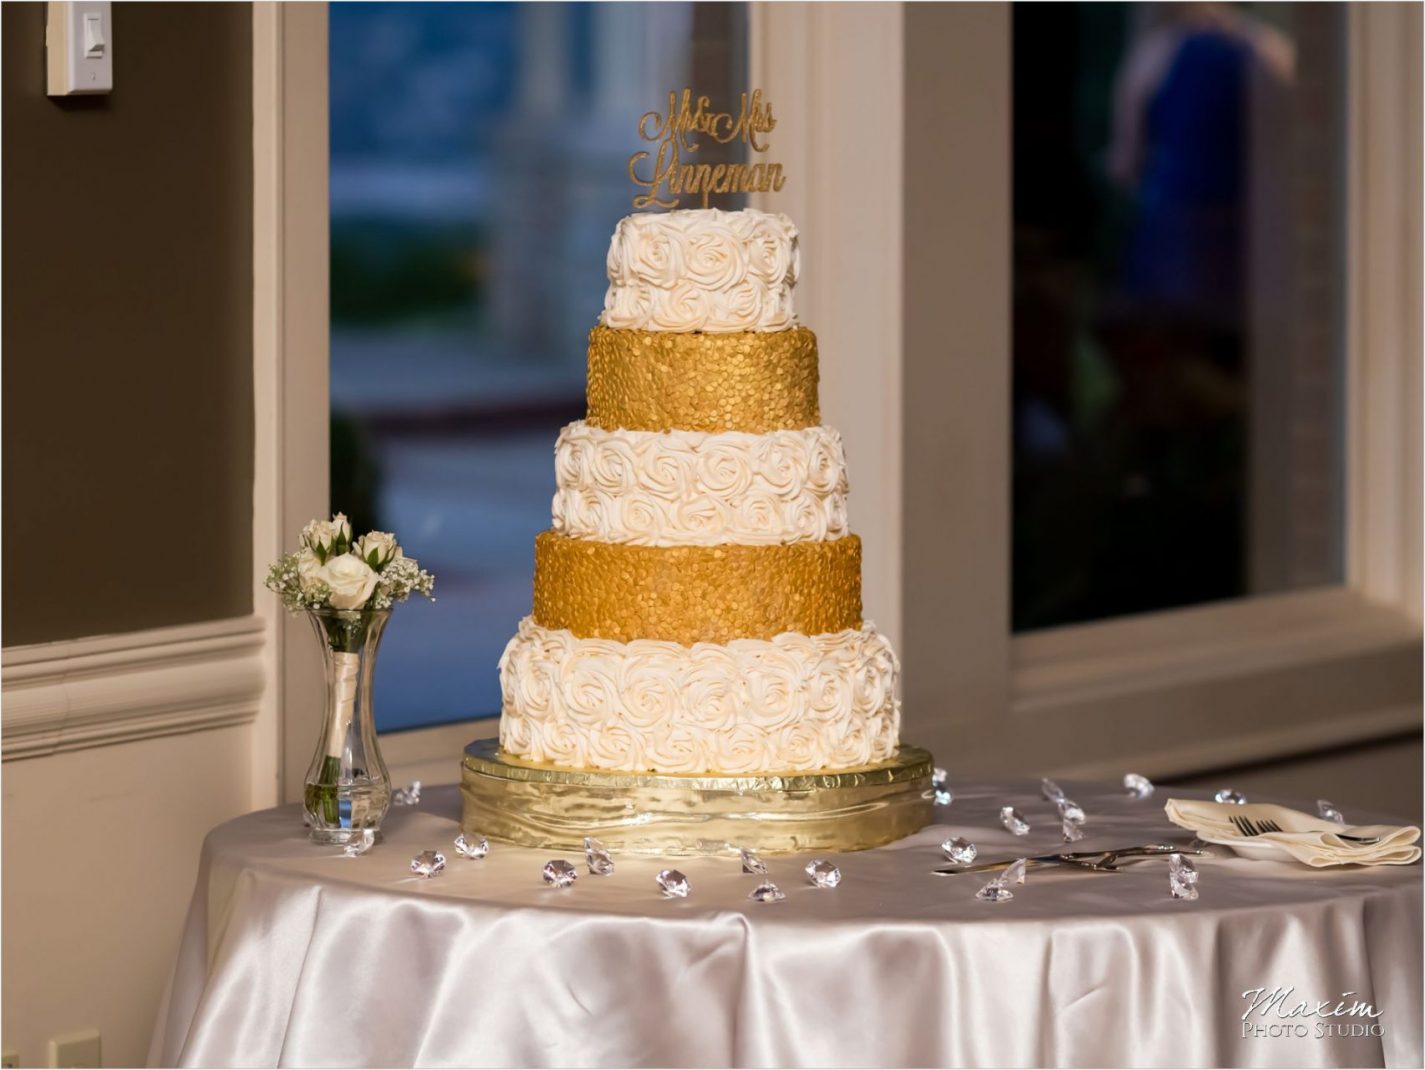 Drees Pavilion Covington Kentucky Wedding Cake